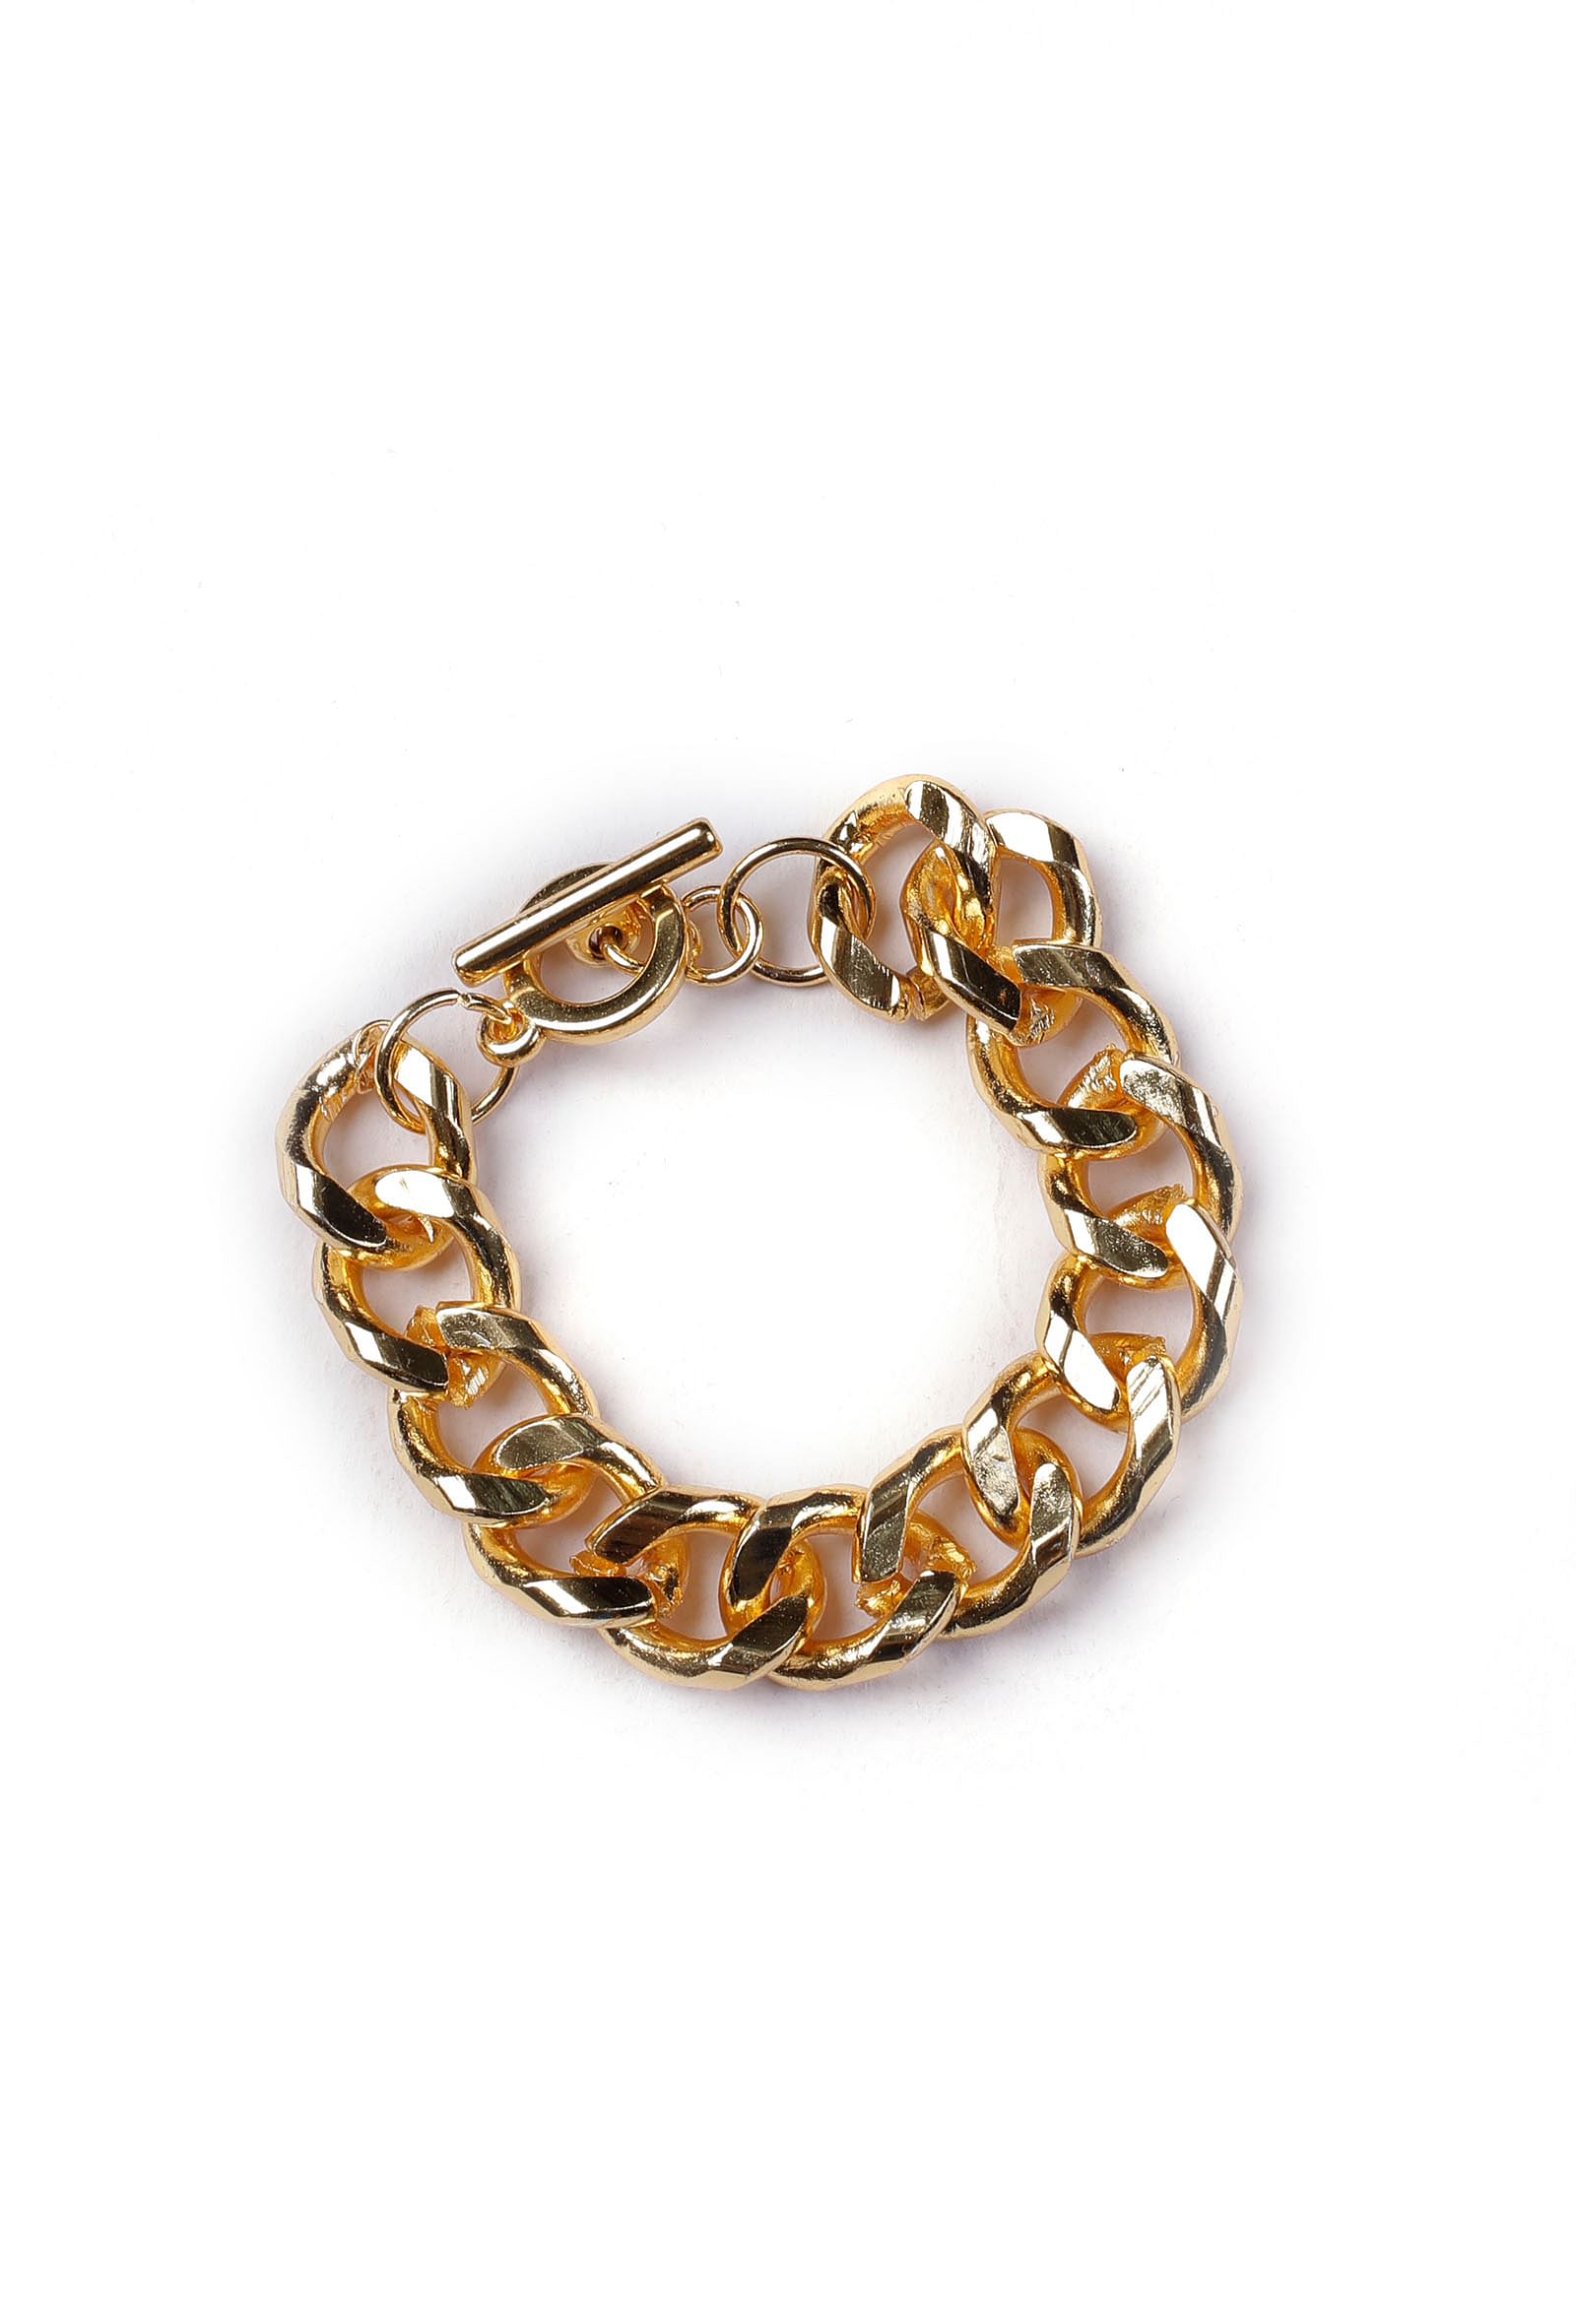 Singapore Twist Chain, Delicate Gold Chain Bracelet, 18k Gold Filled  Bracelet, Simple Twist Chain Bracelet Layering Jewelry Minimal Bracelet -  Etsy